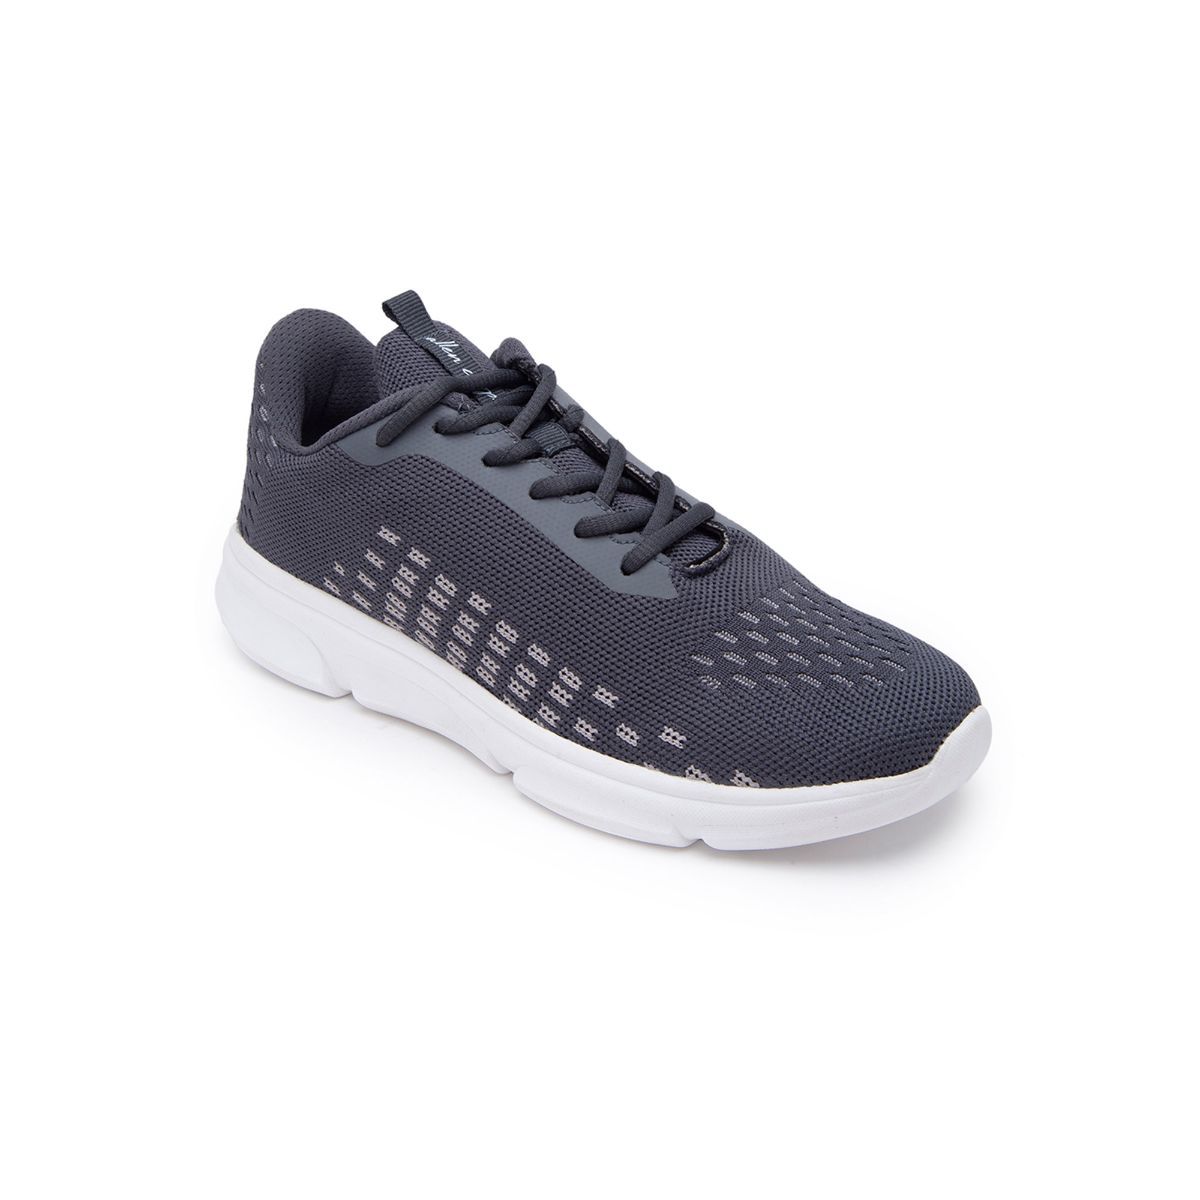 Allen Cooper Grey Mesh Sports Shoes - 7